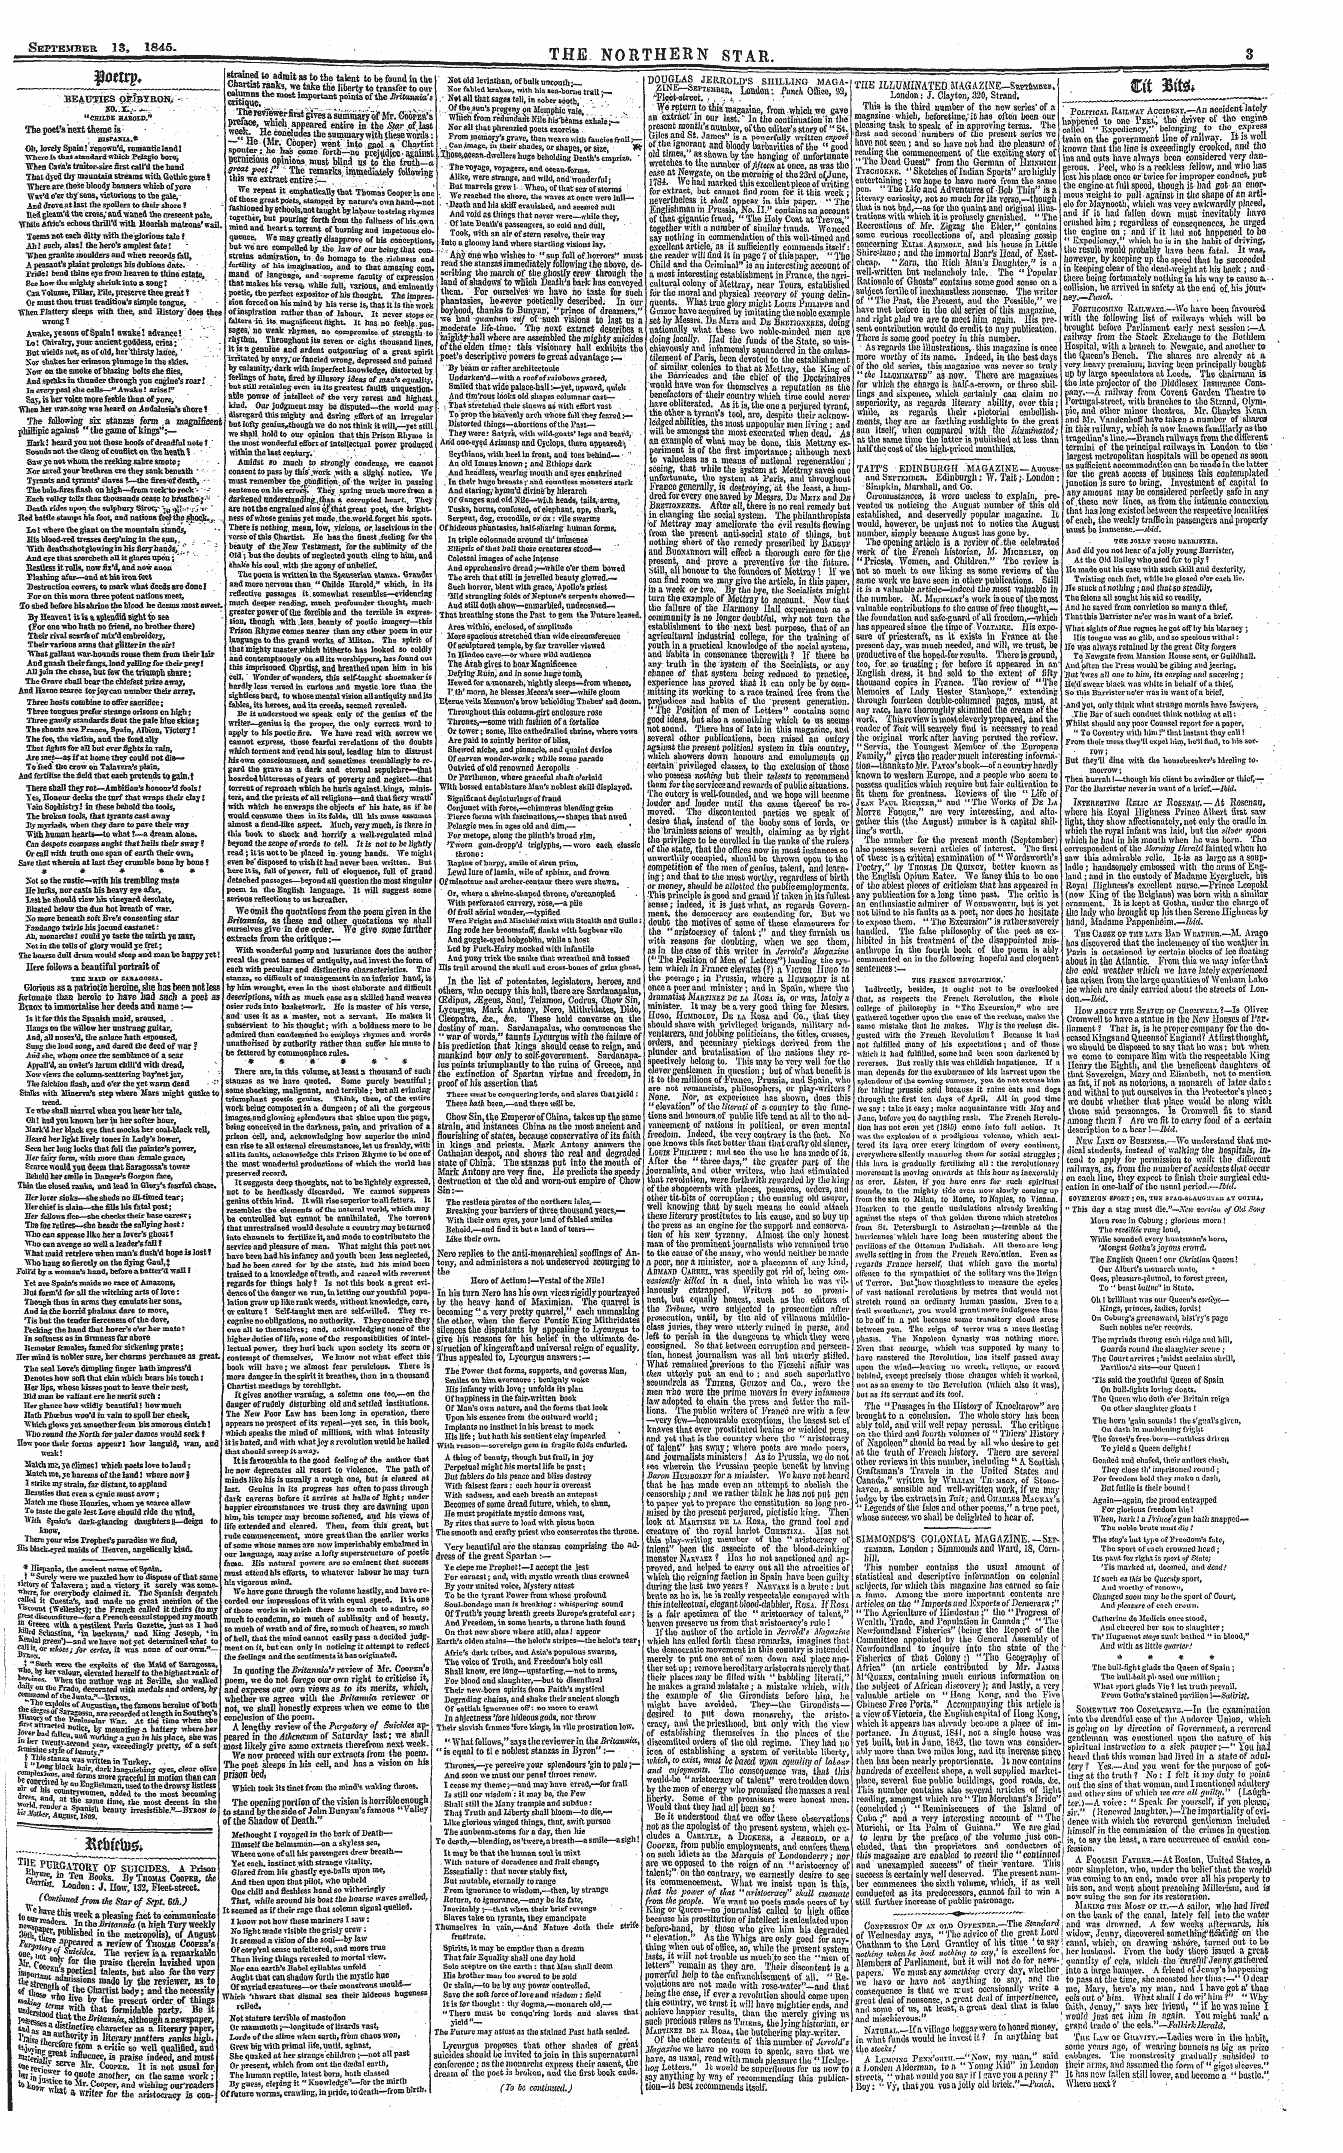 Northern Star (1837-1852): jS F Y, 3rd edition - Vqvsv * Jerrold's Shilling Maga-.. Zine-...